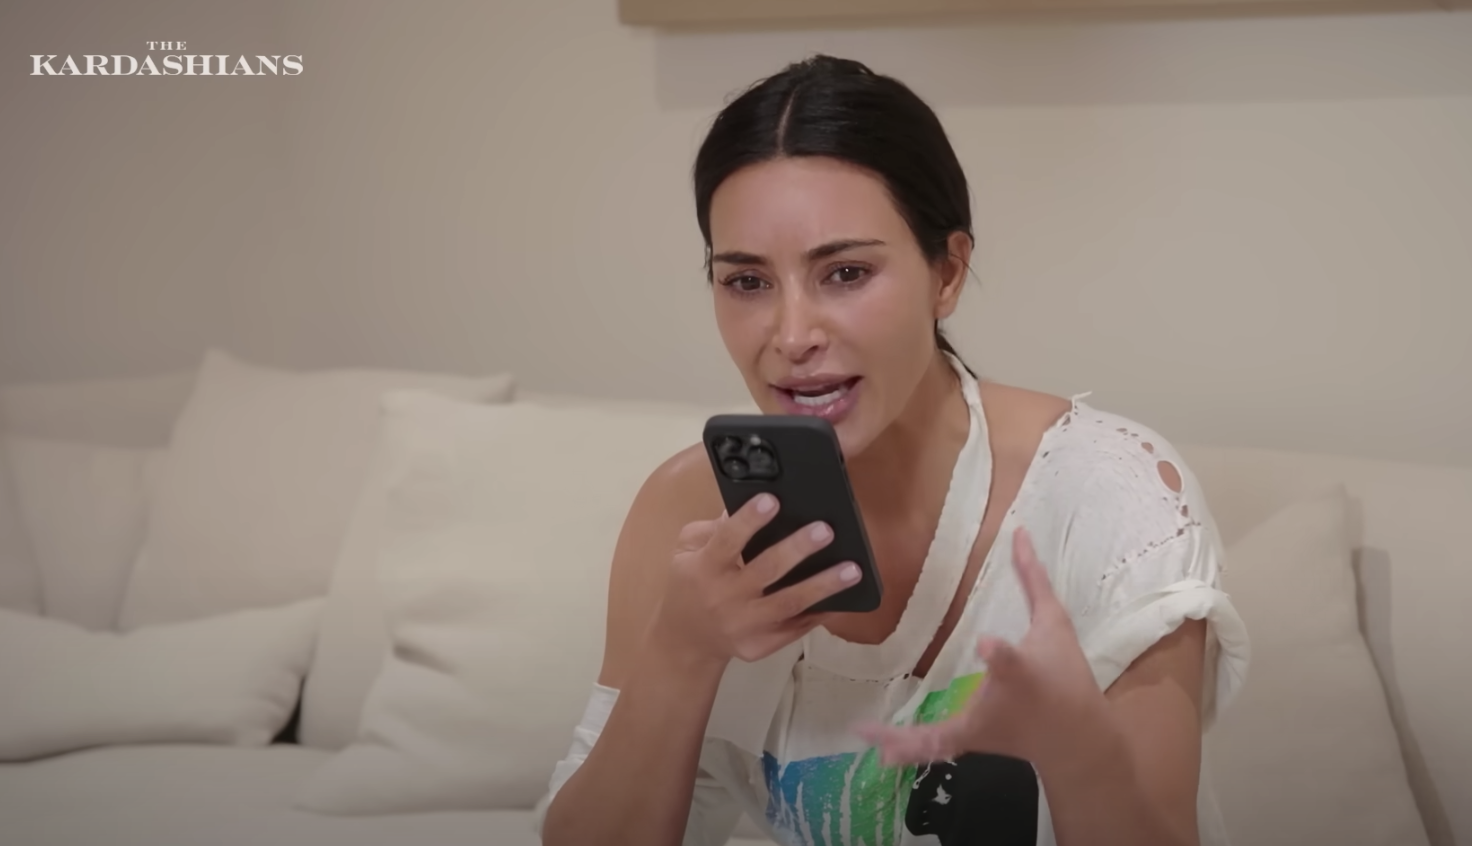 Kim talking into a phone